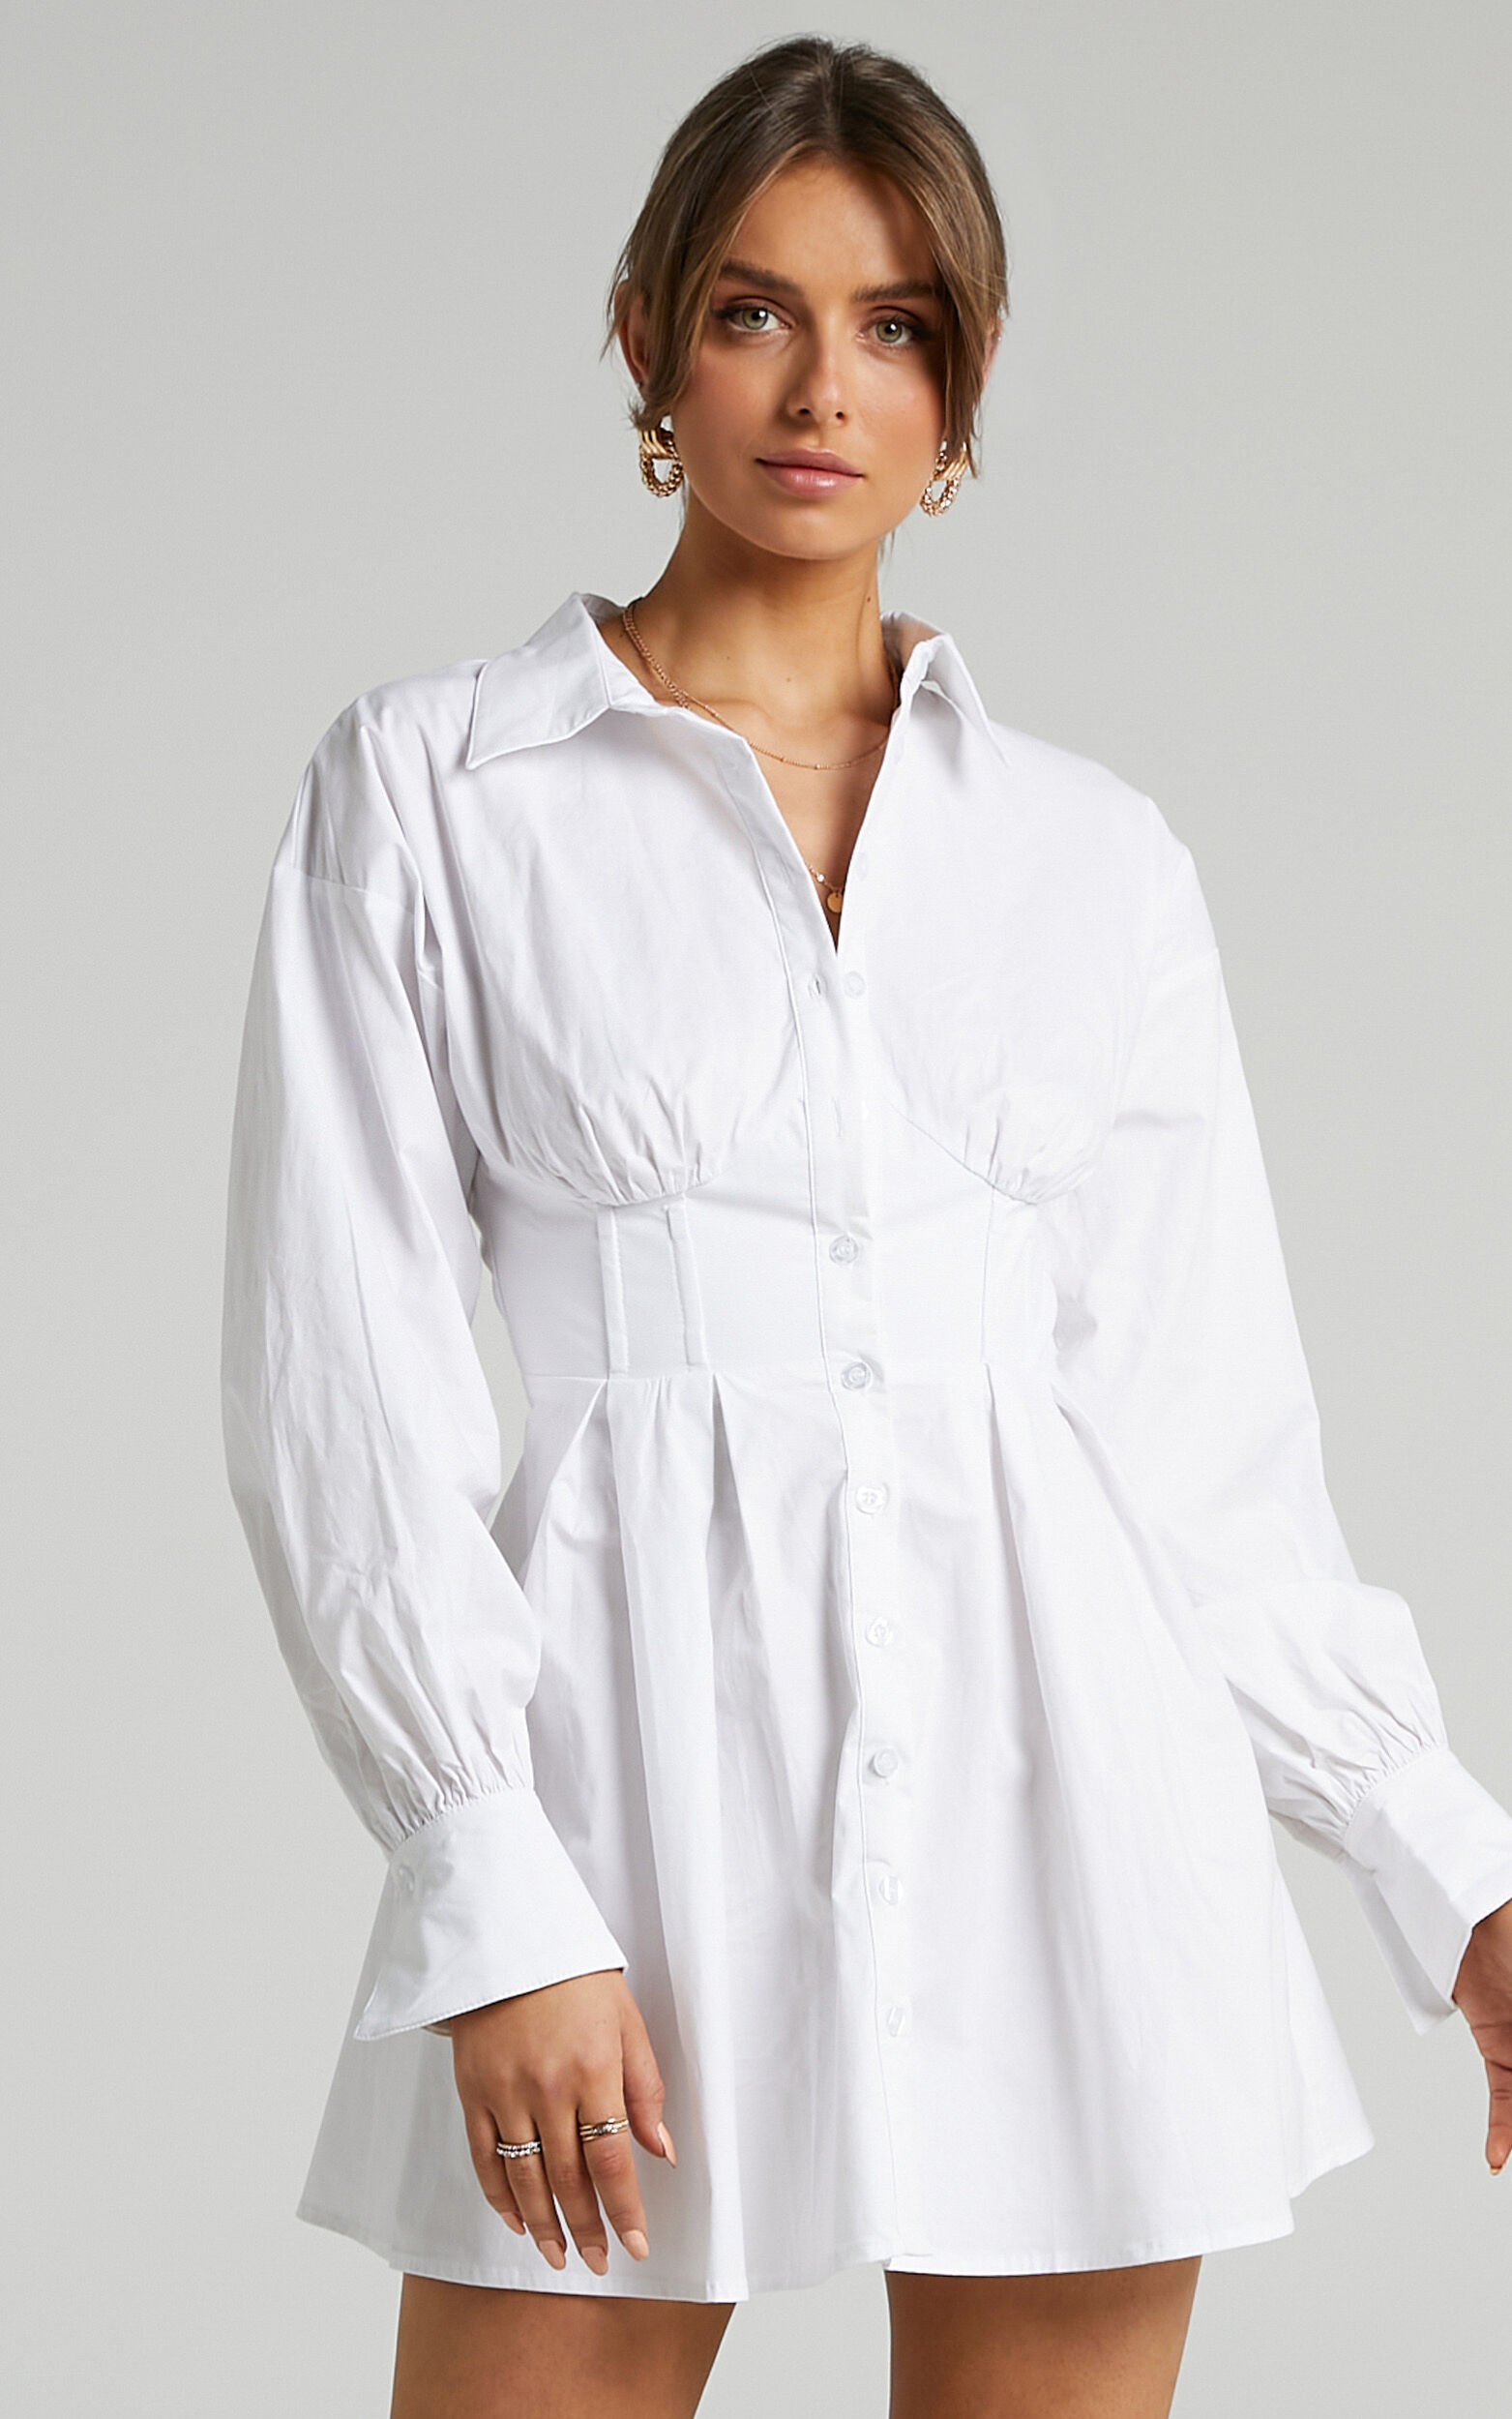 Claudette Corset Shirt Dress in White | Showpo